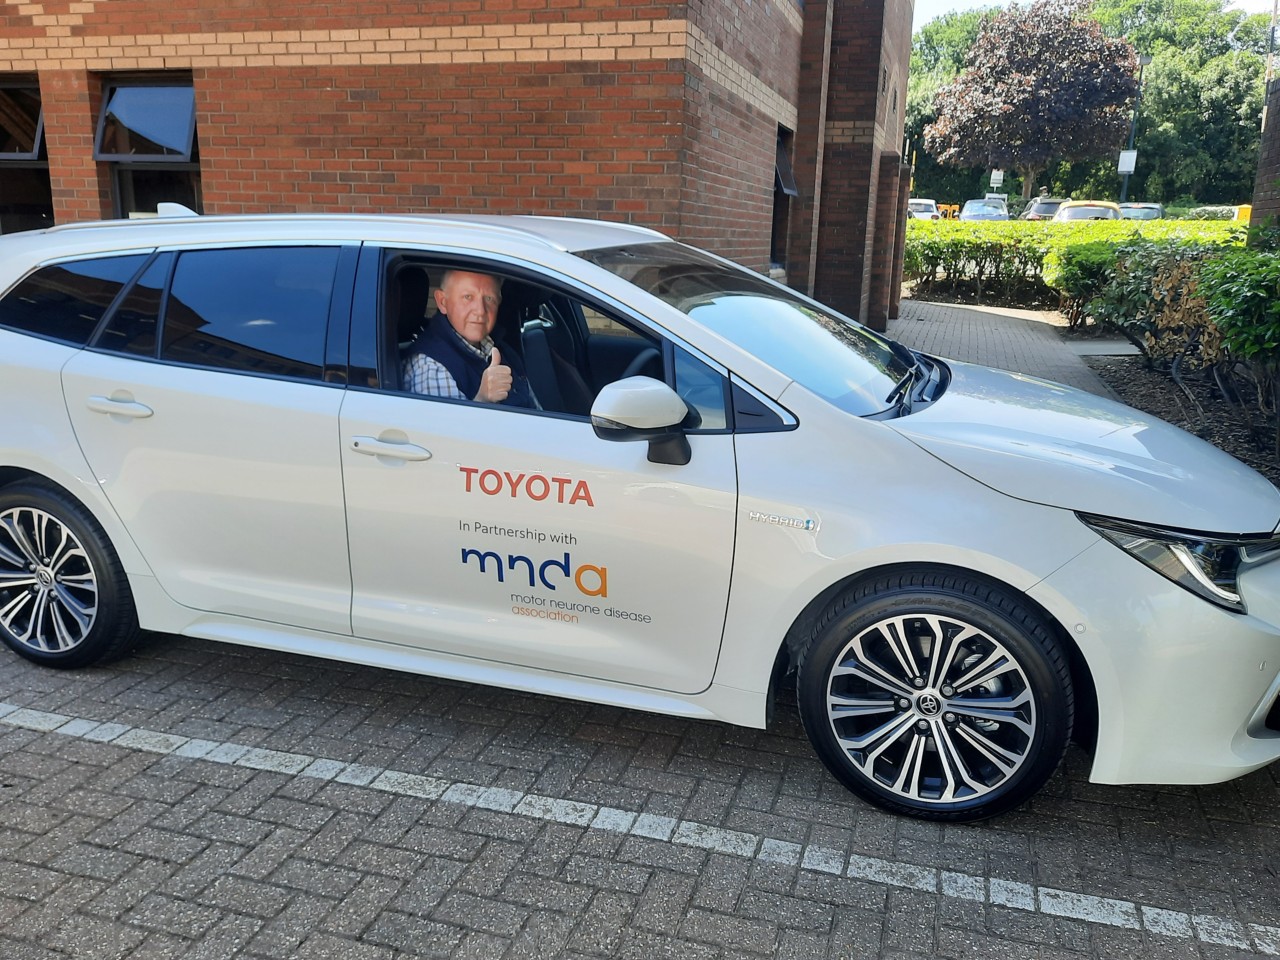 Toyota MNDA charity with elderly man driving car